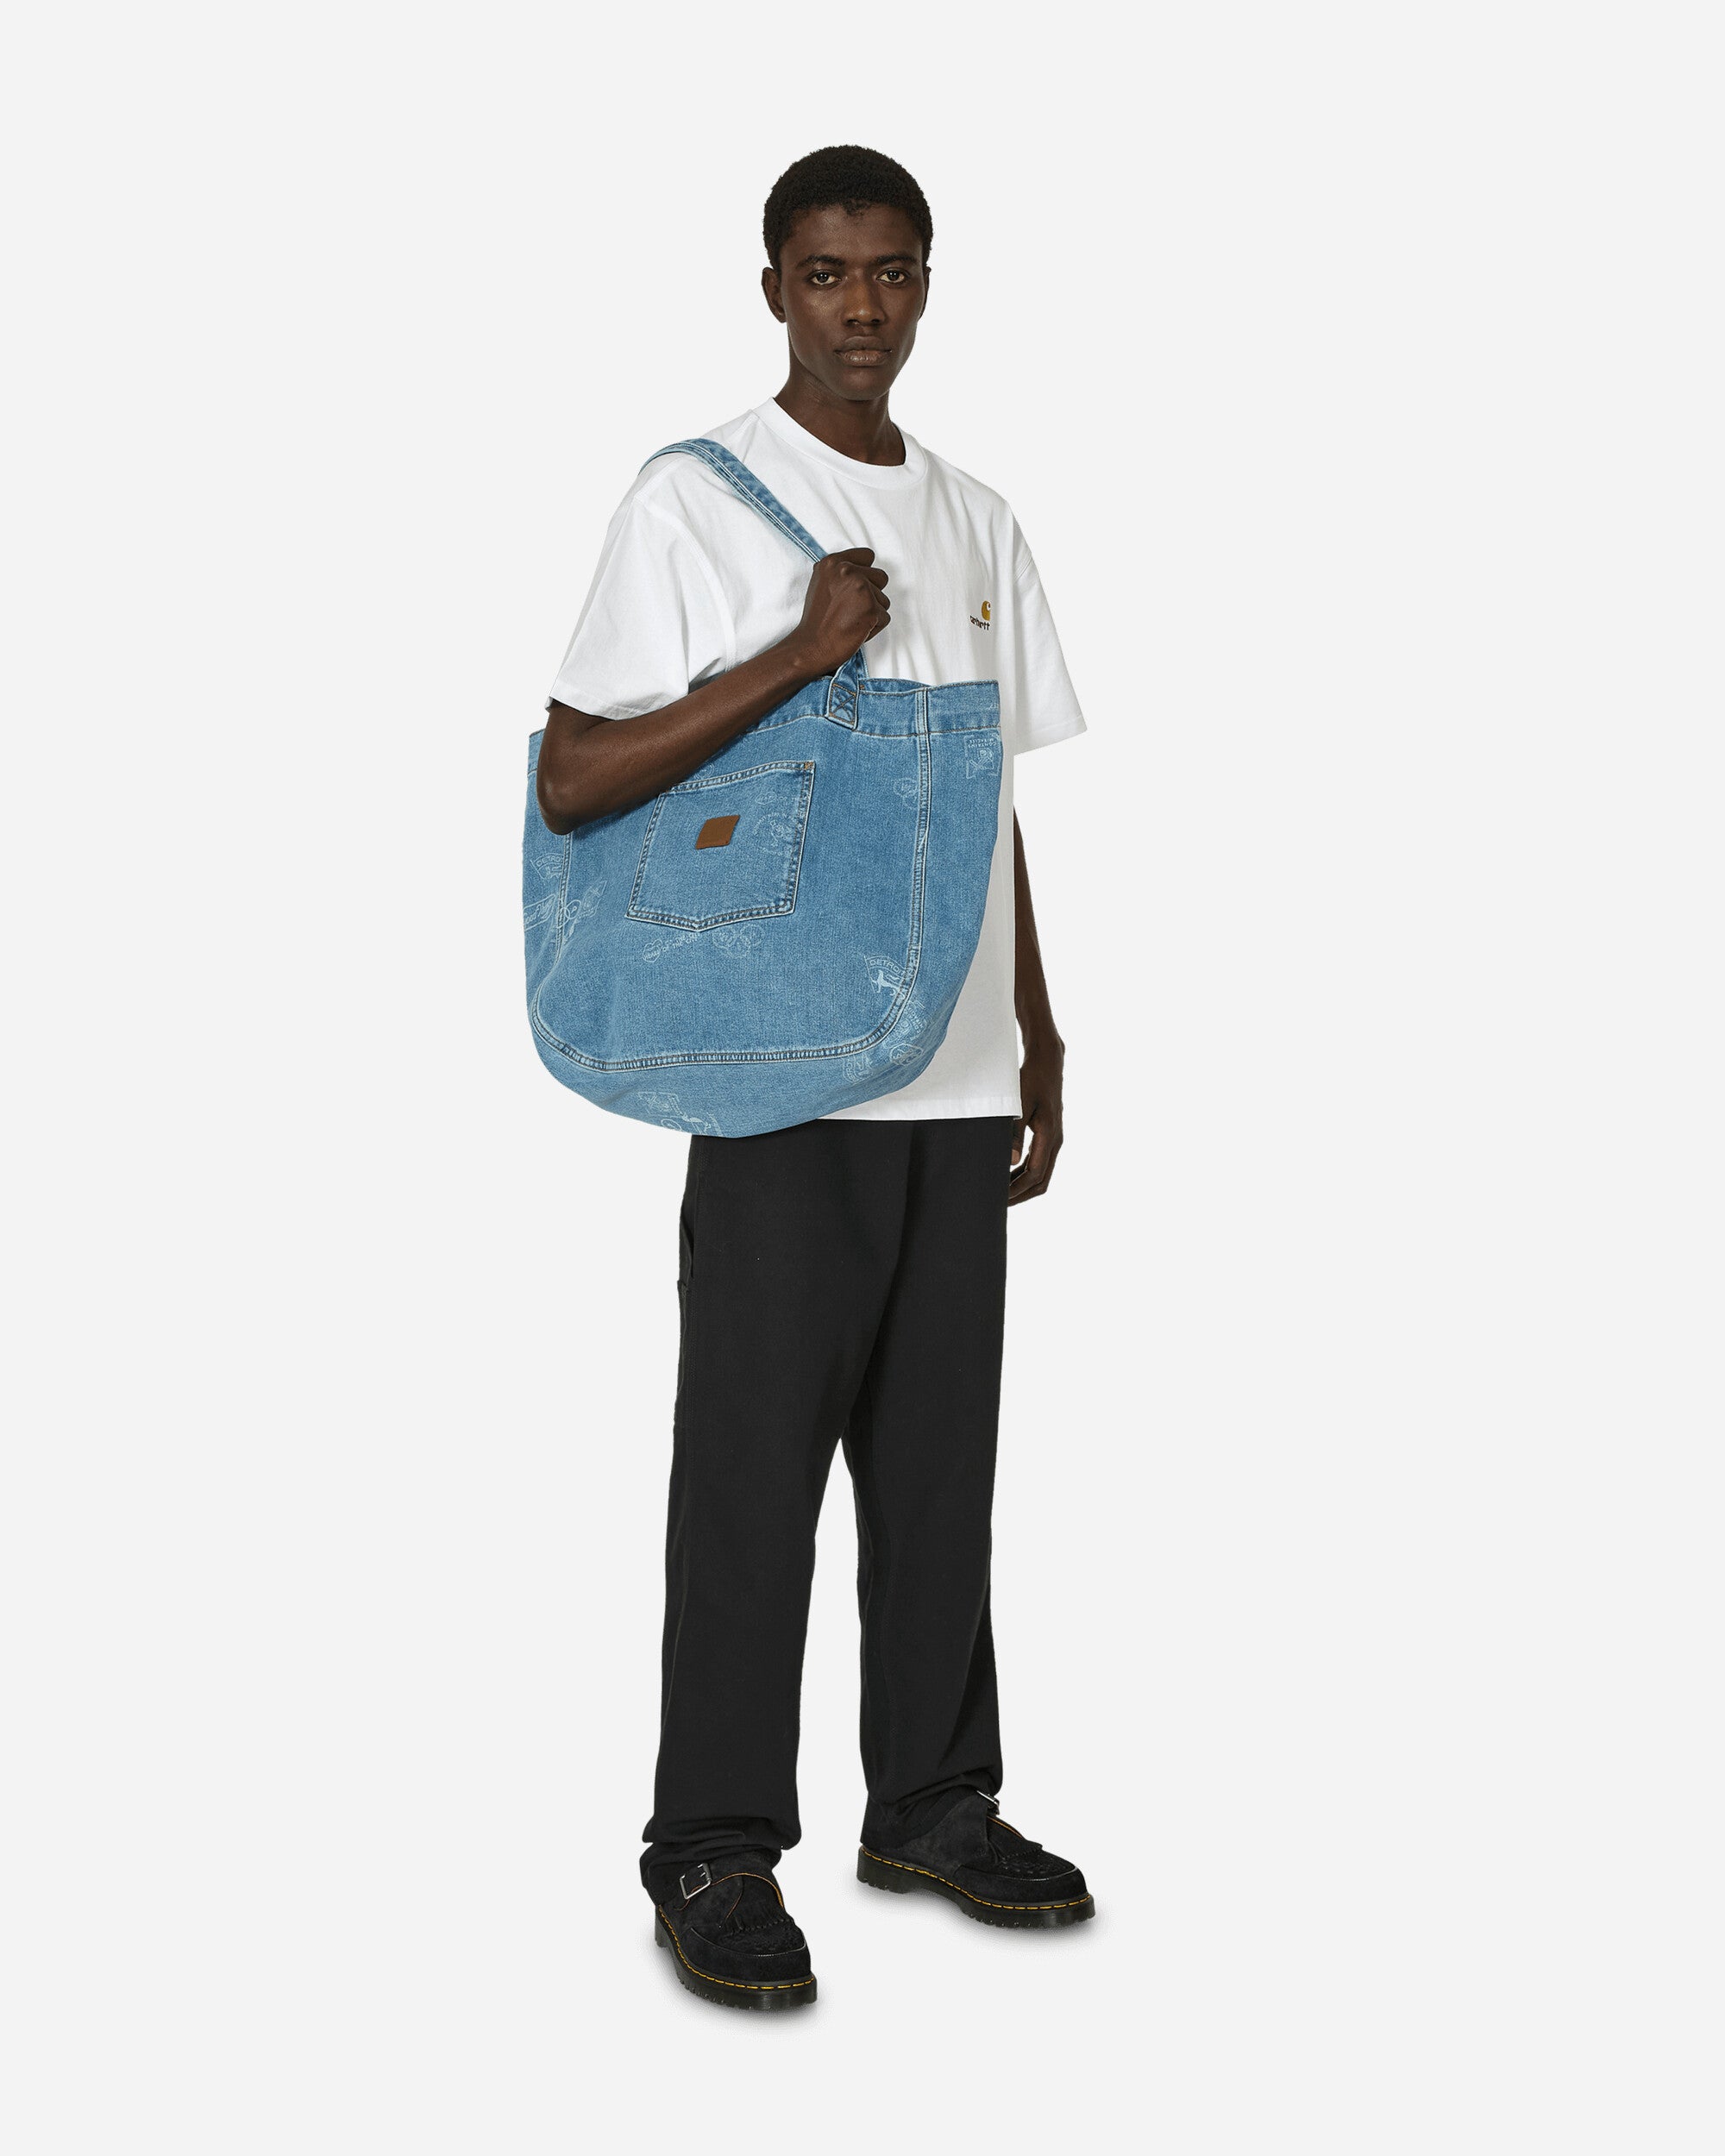 Carhartt WIP Stamp Tote Bag Blue Bleached Bags and Backpacks Tote Bags I033740 2LN35